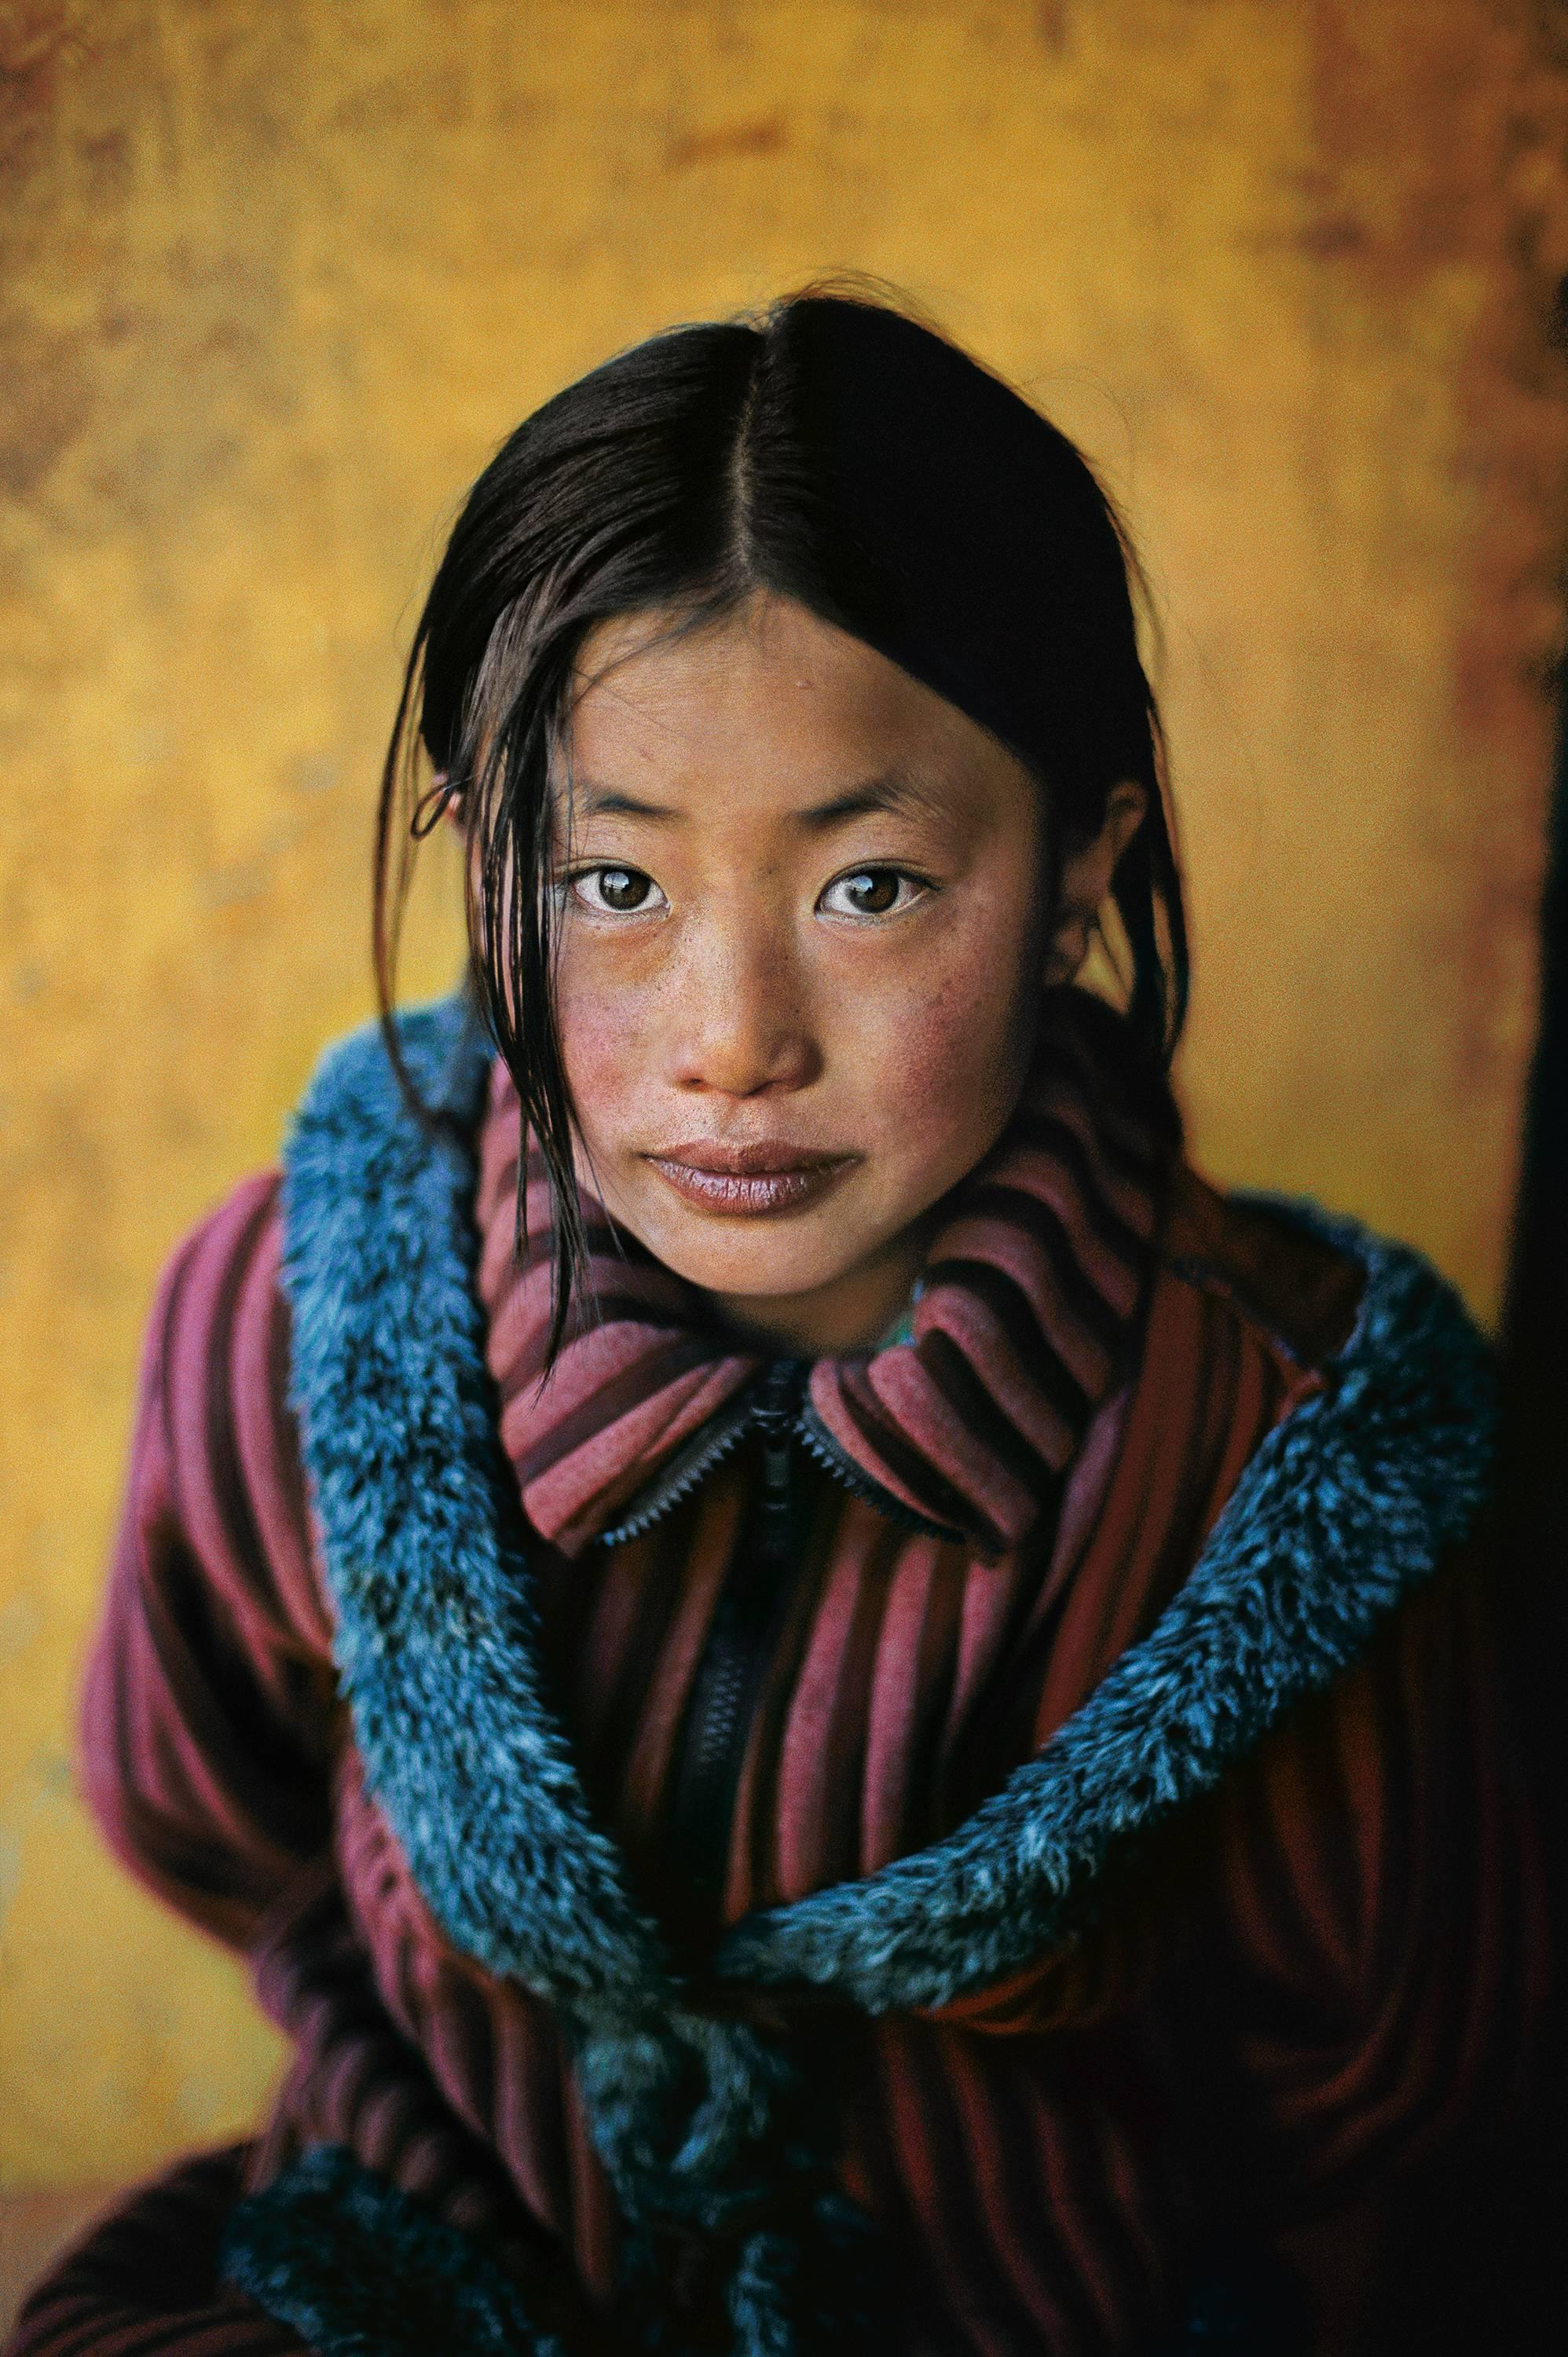 Steve McCurry Portrait Photograph - Girl in New Coat, Xigaze, Tibet